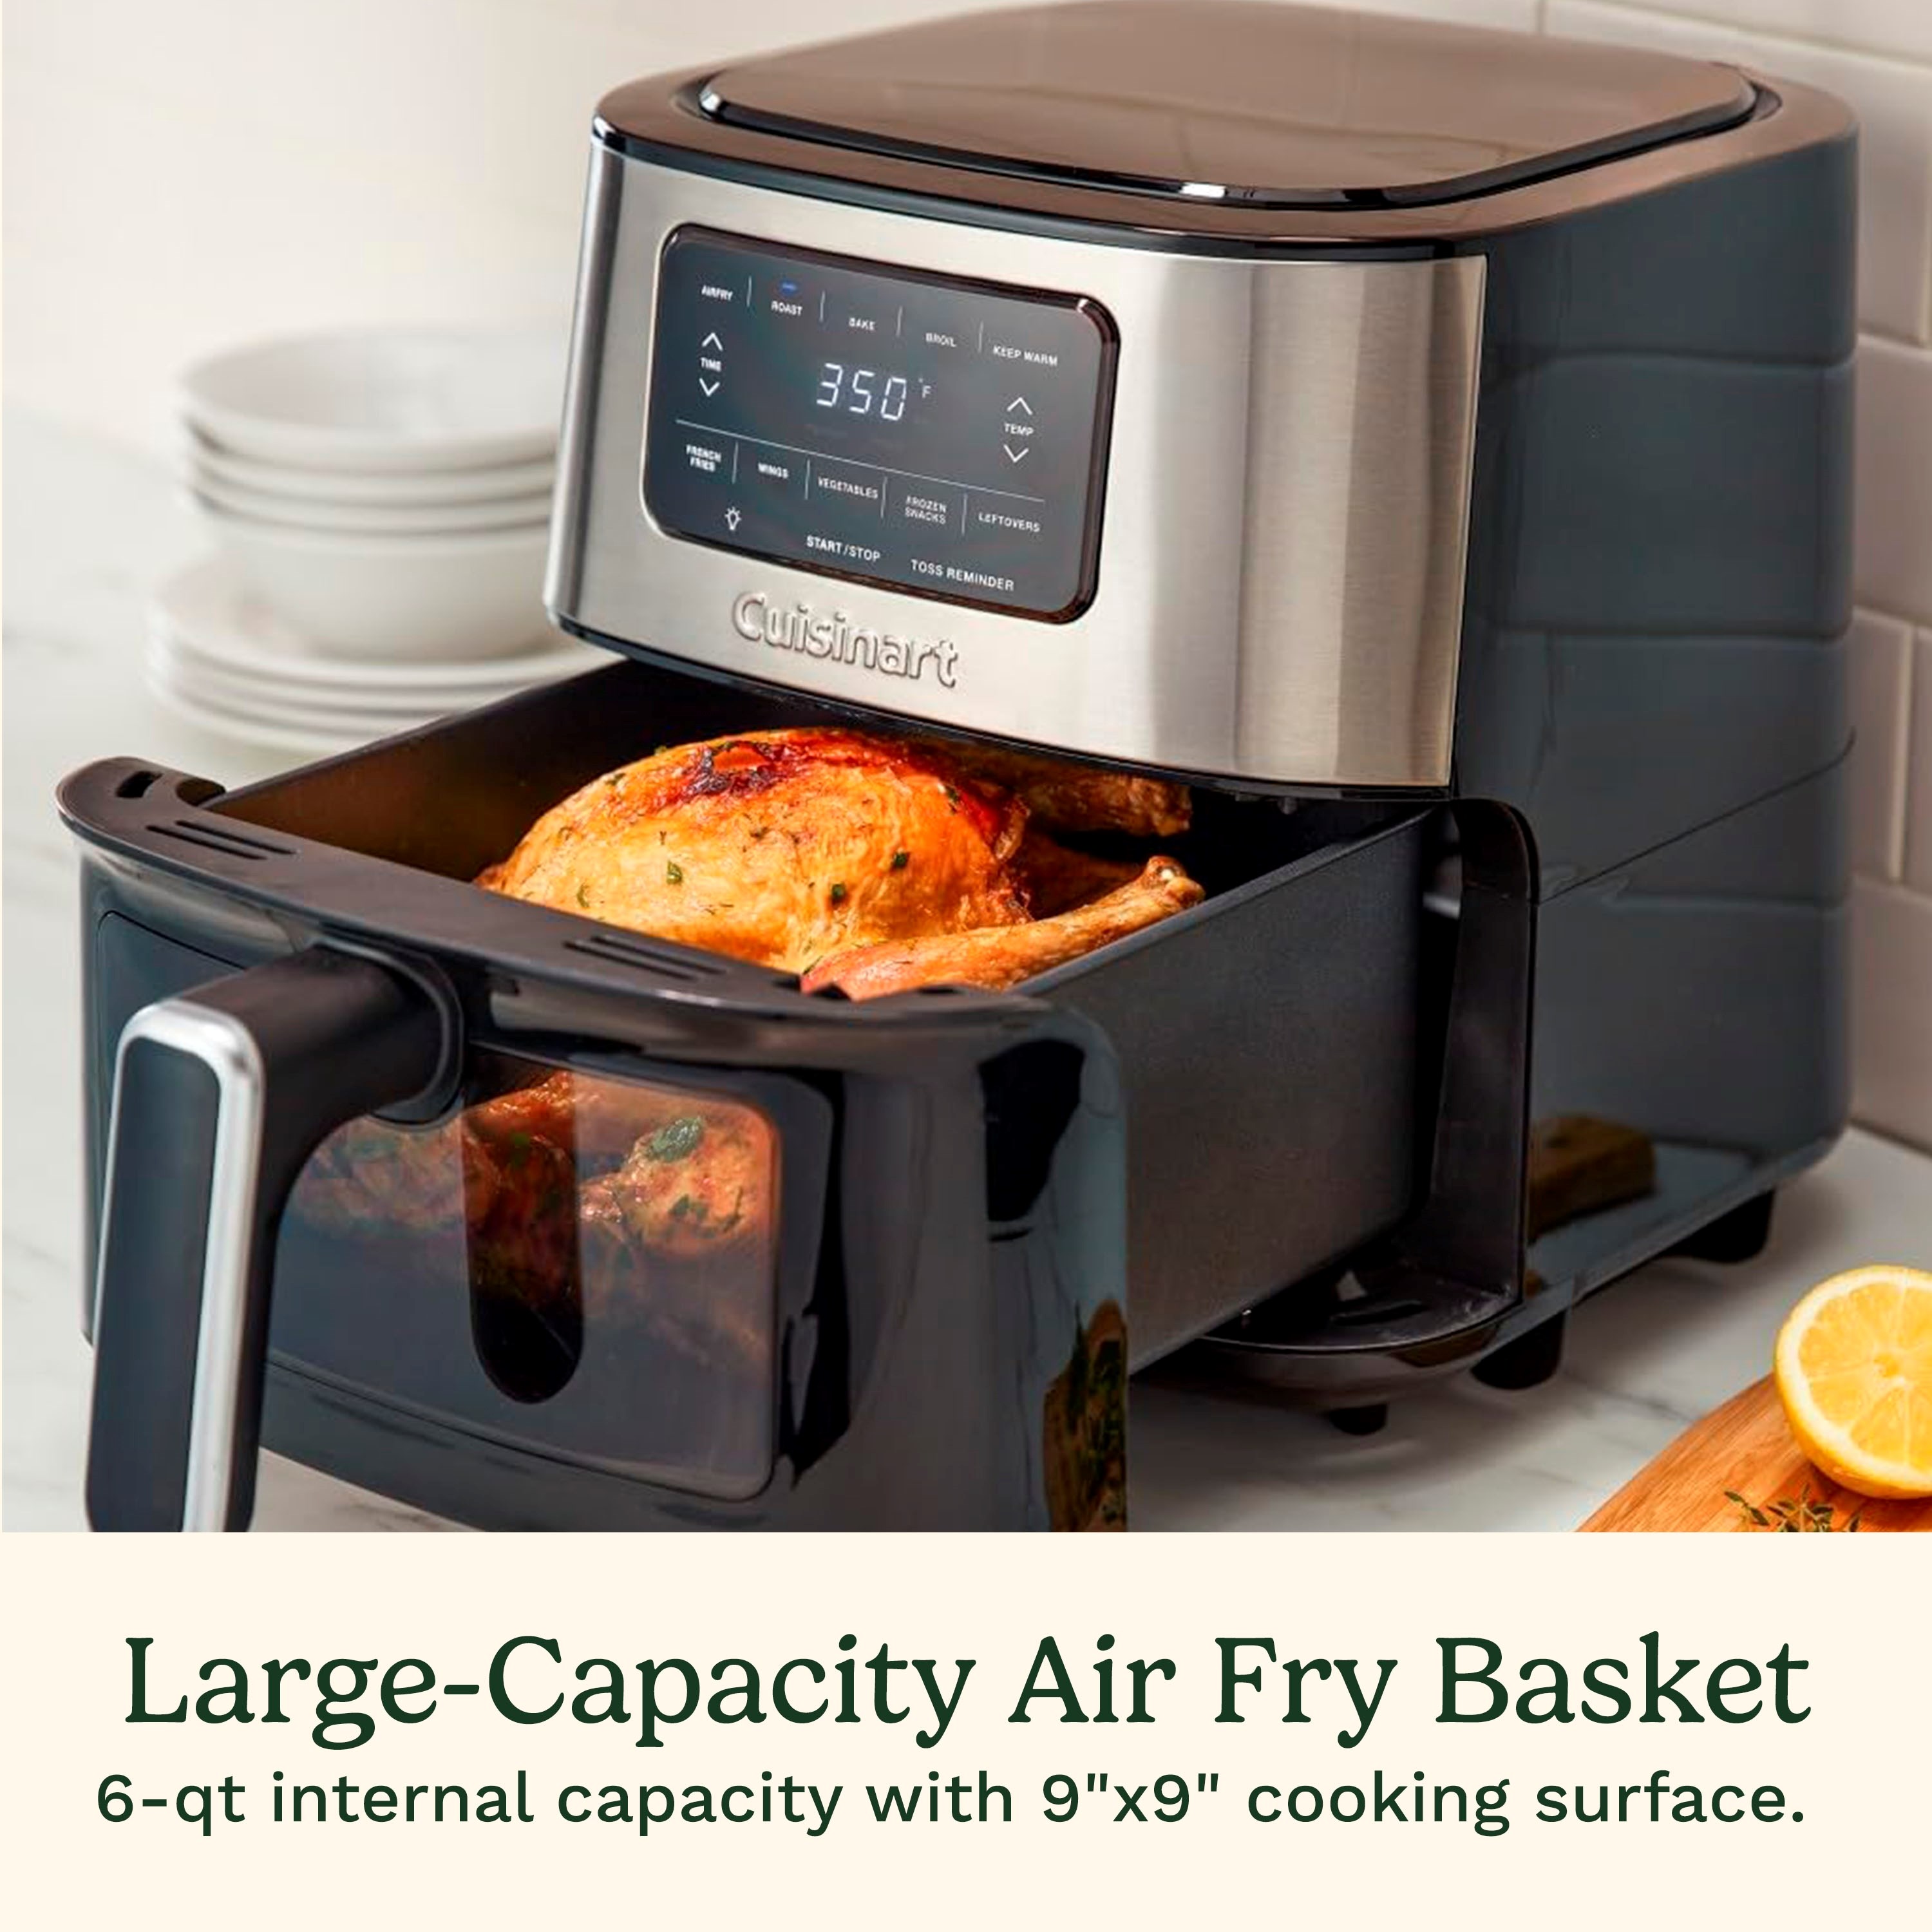 Basket Air Fryer